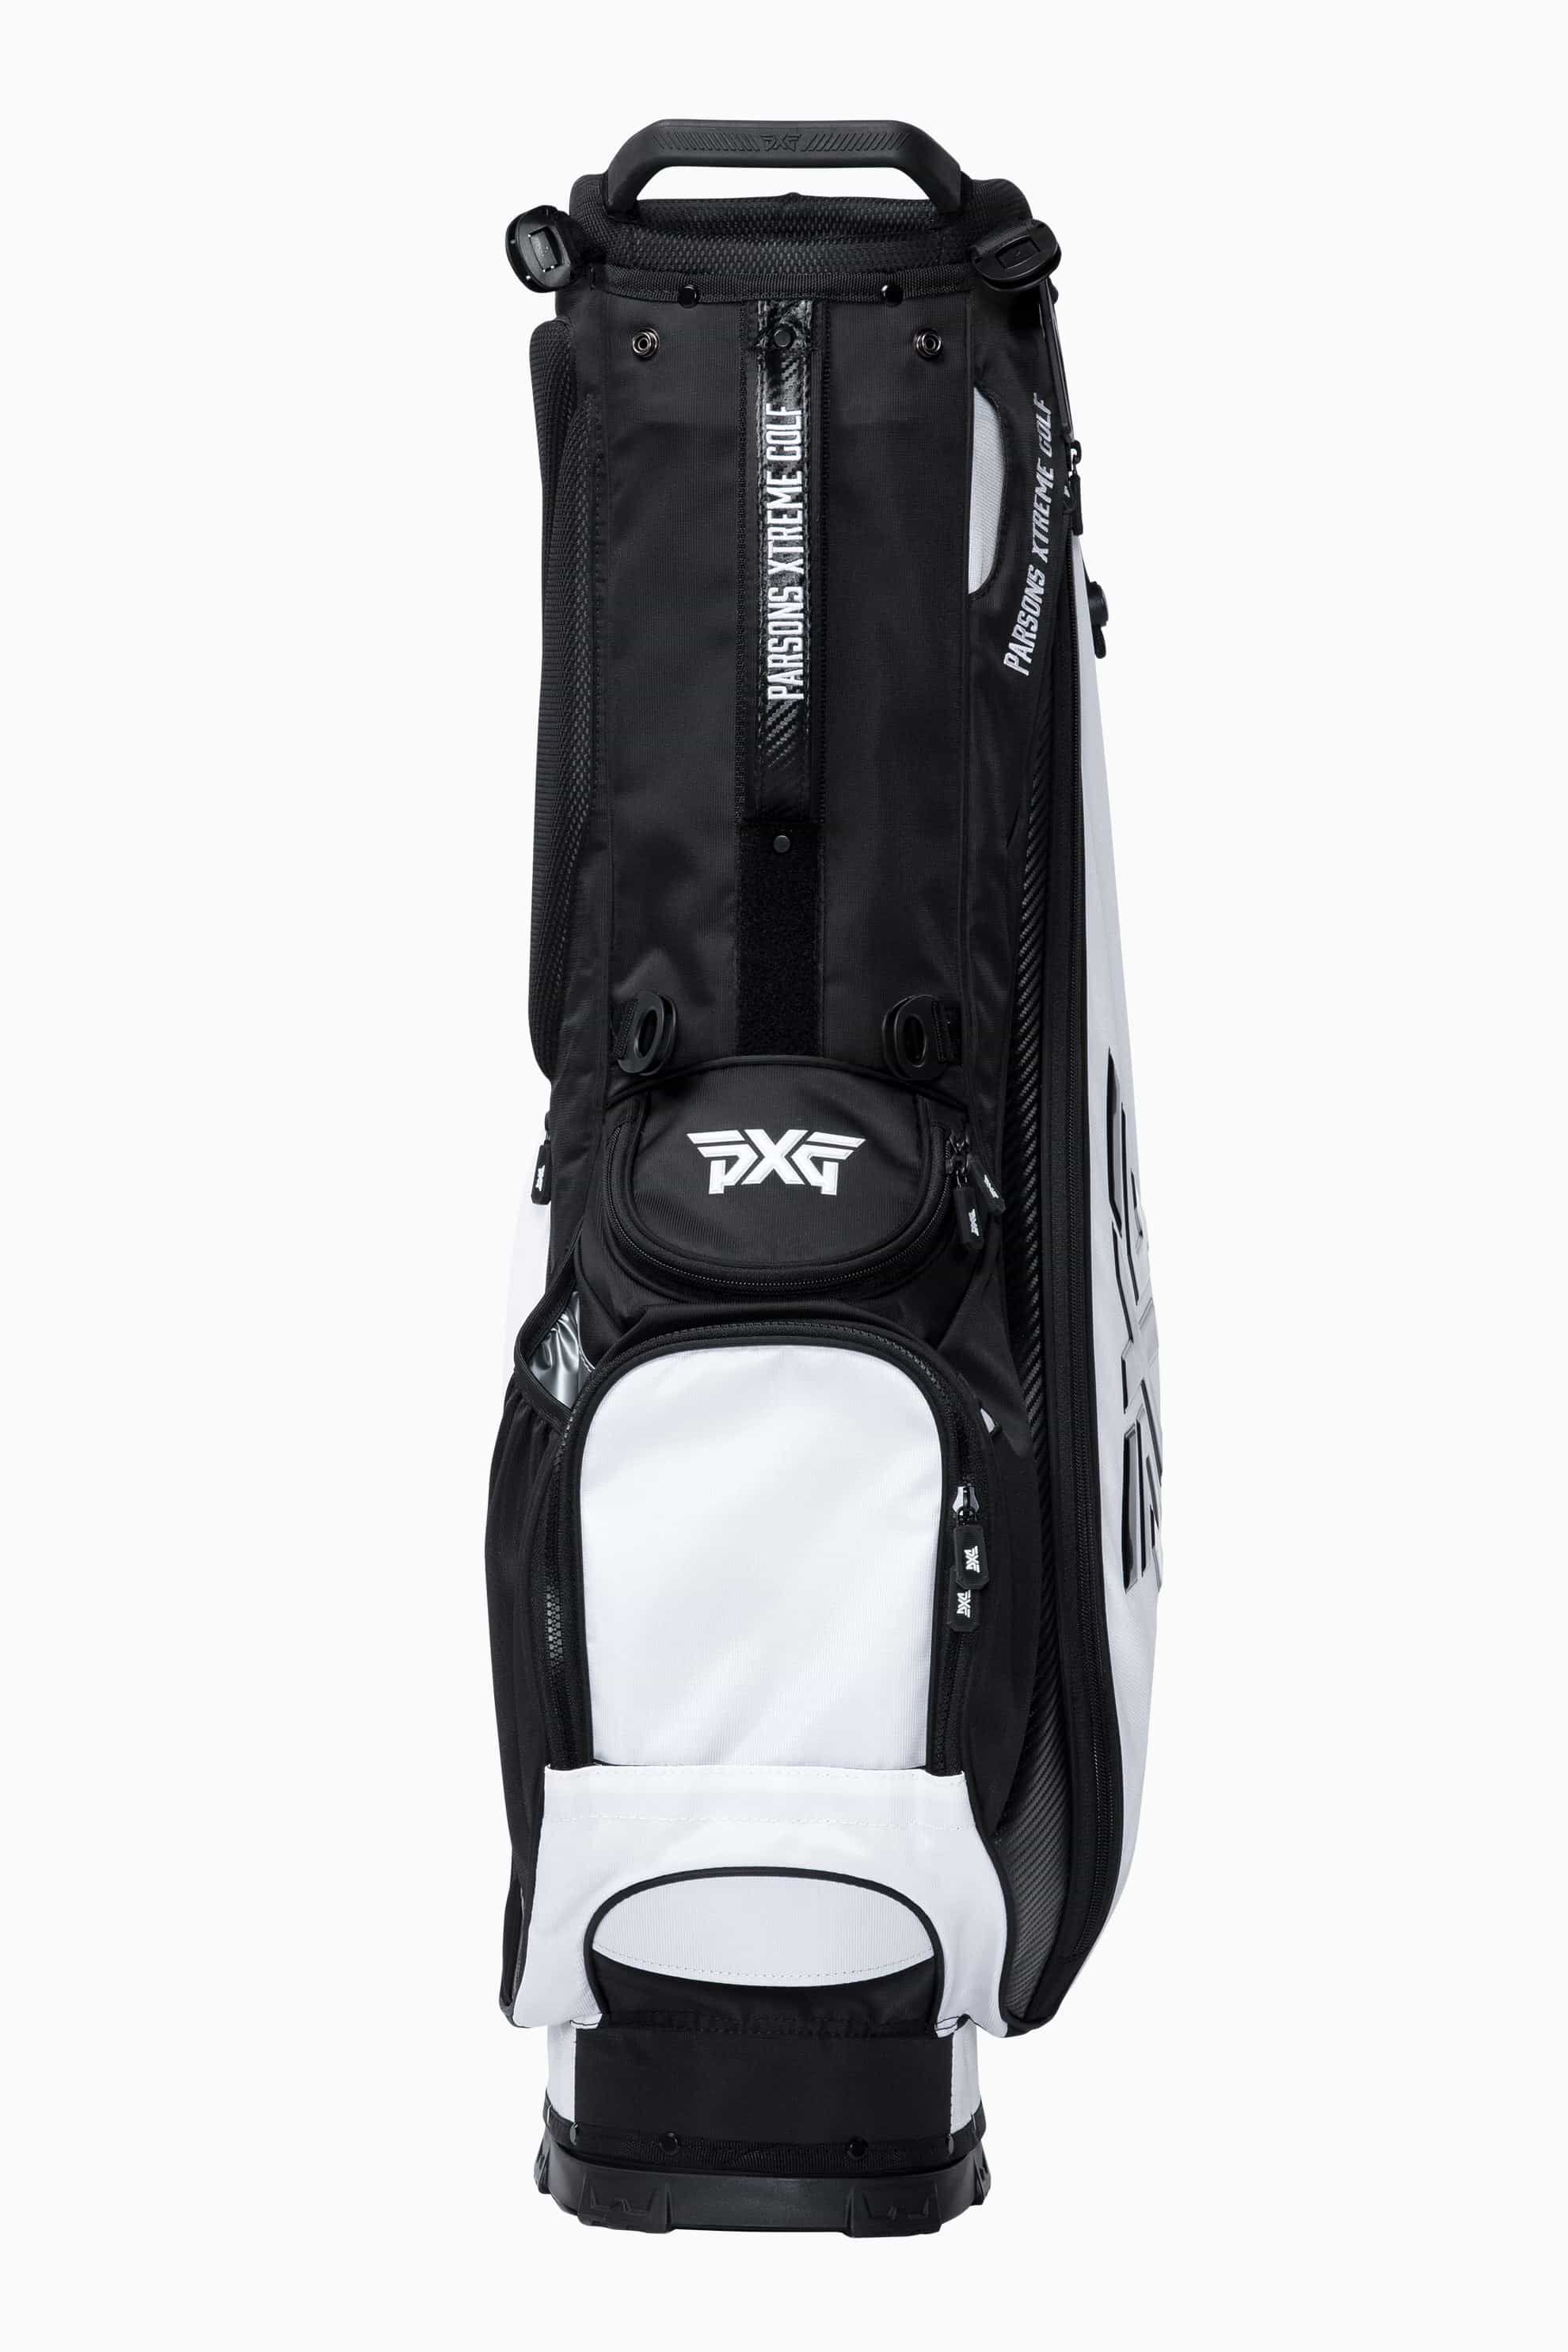 LIghtweight Carry Stand Bag | Shop the Highest Quality Golf